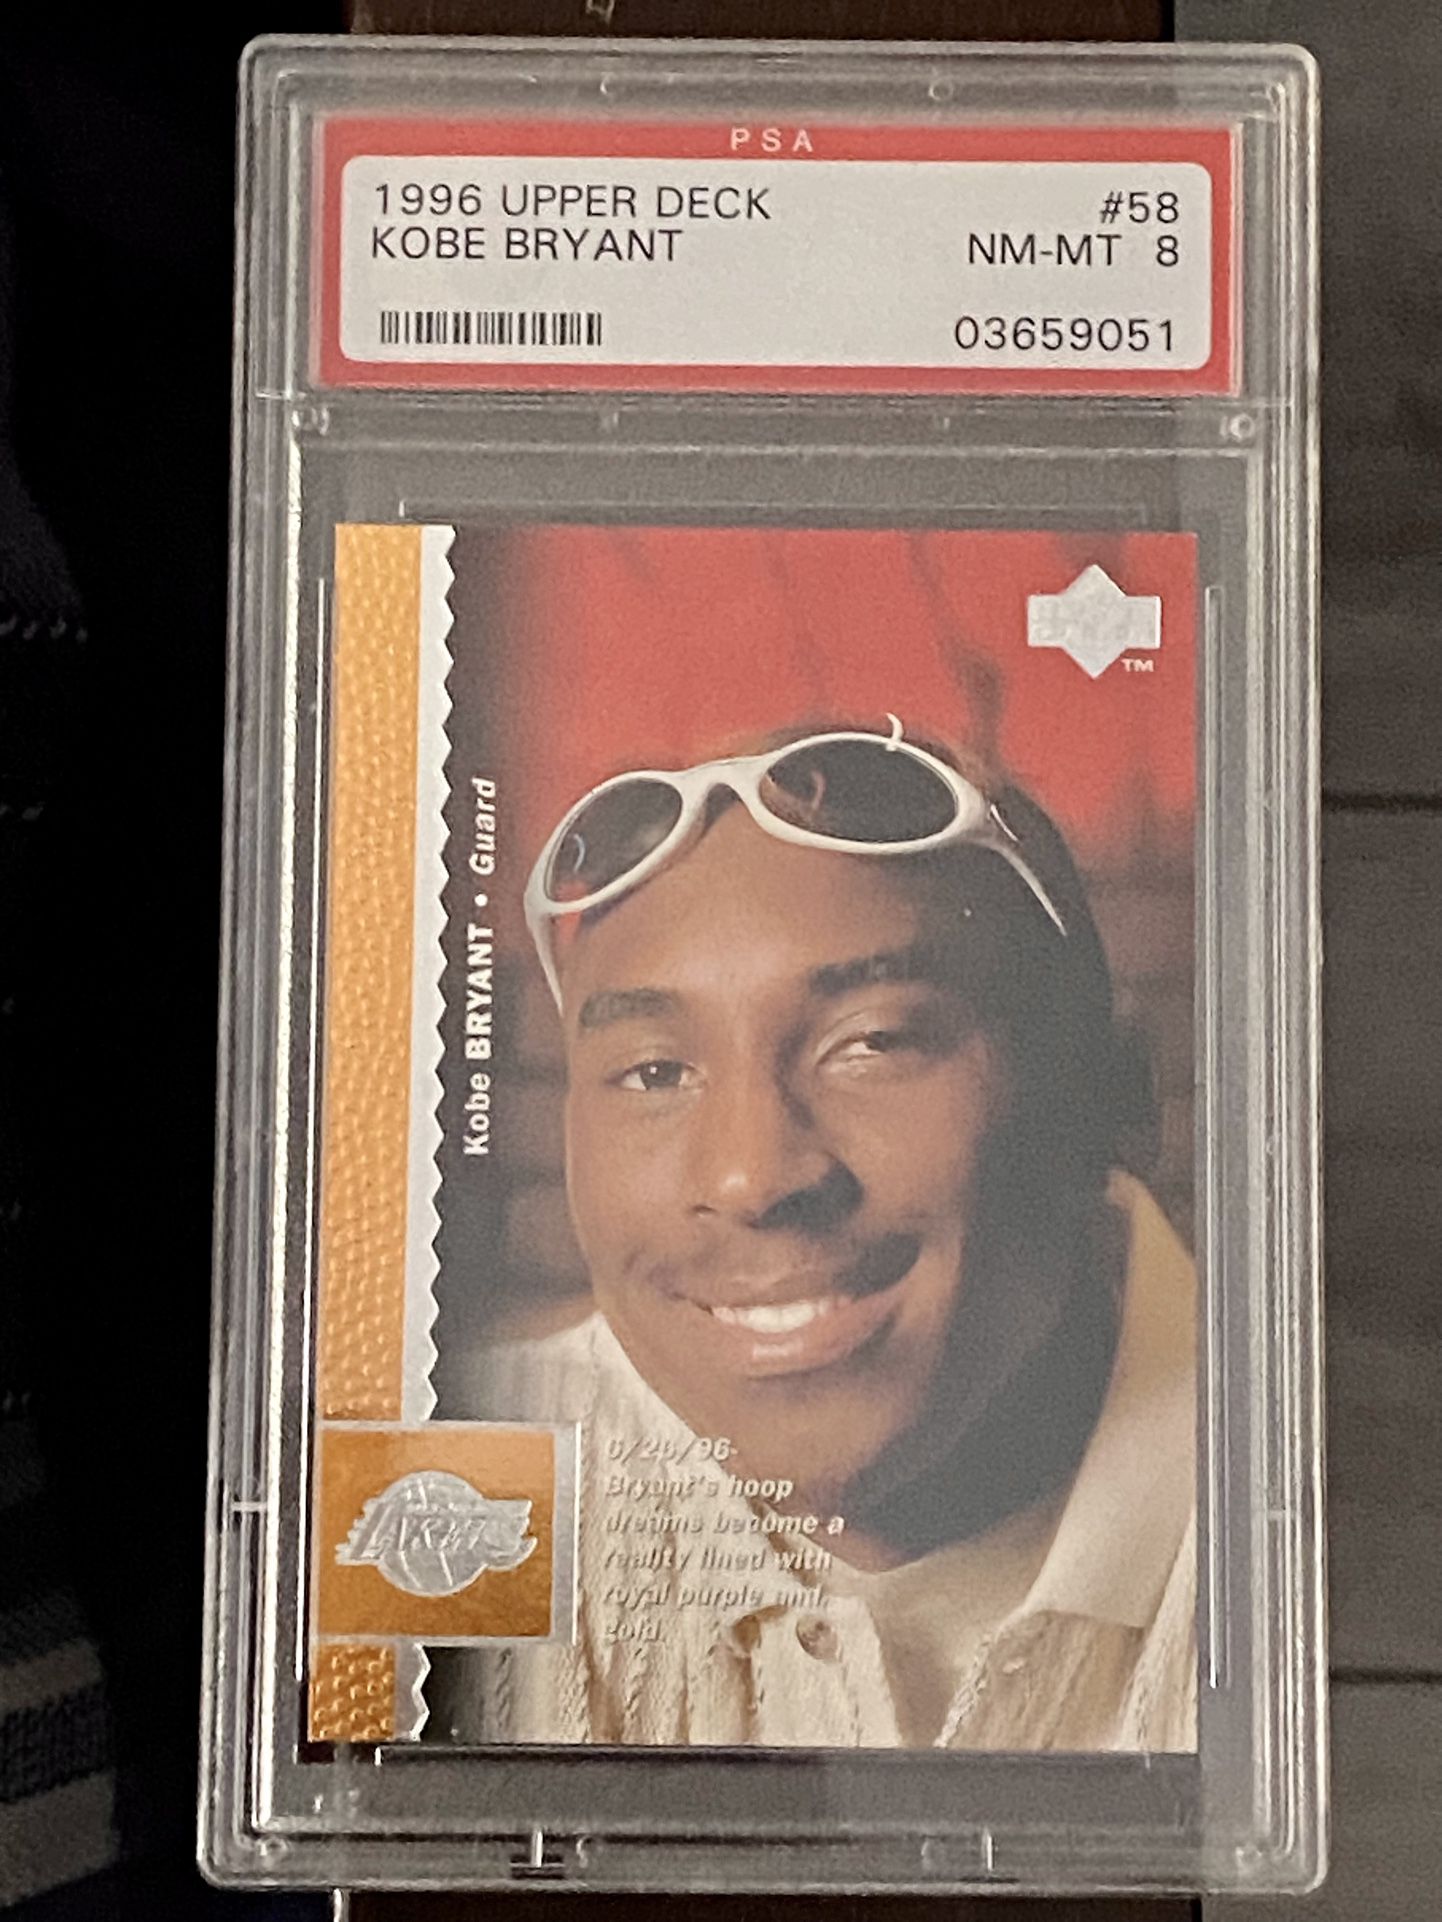 1996 upper deck kobe bryant rookie card